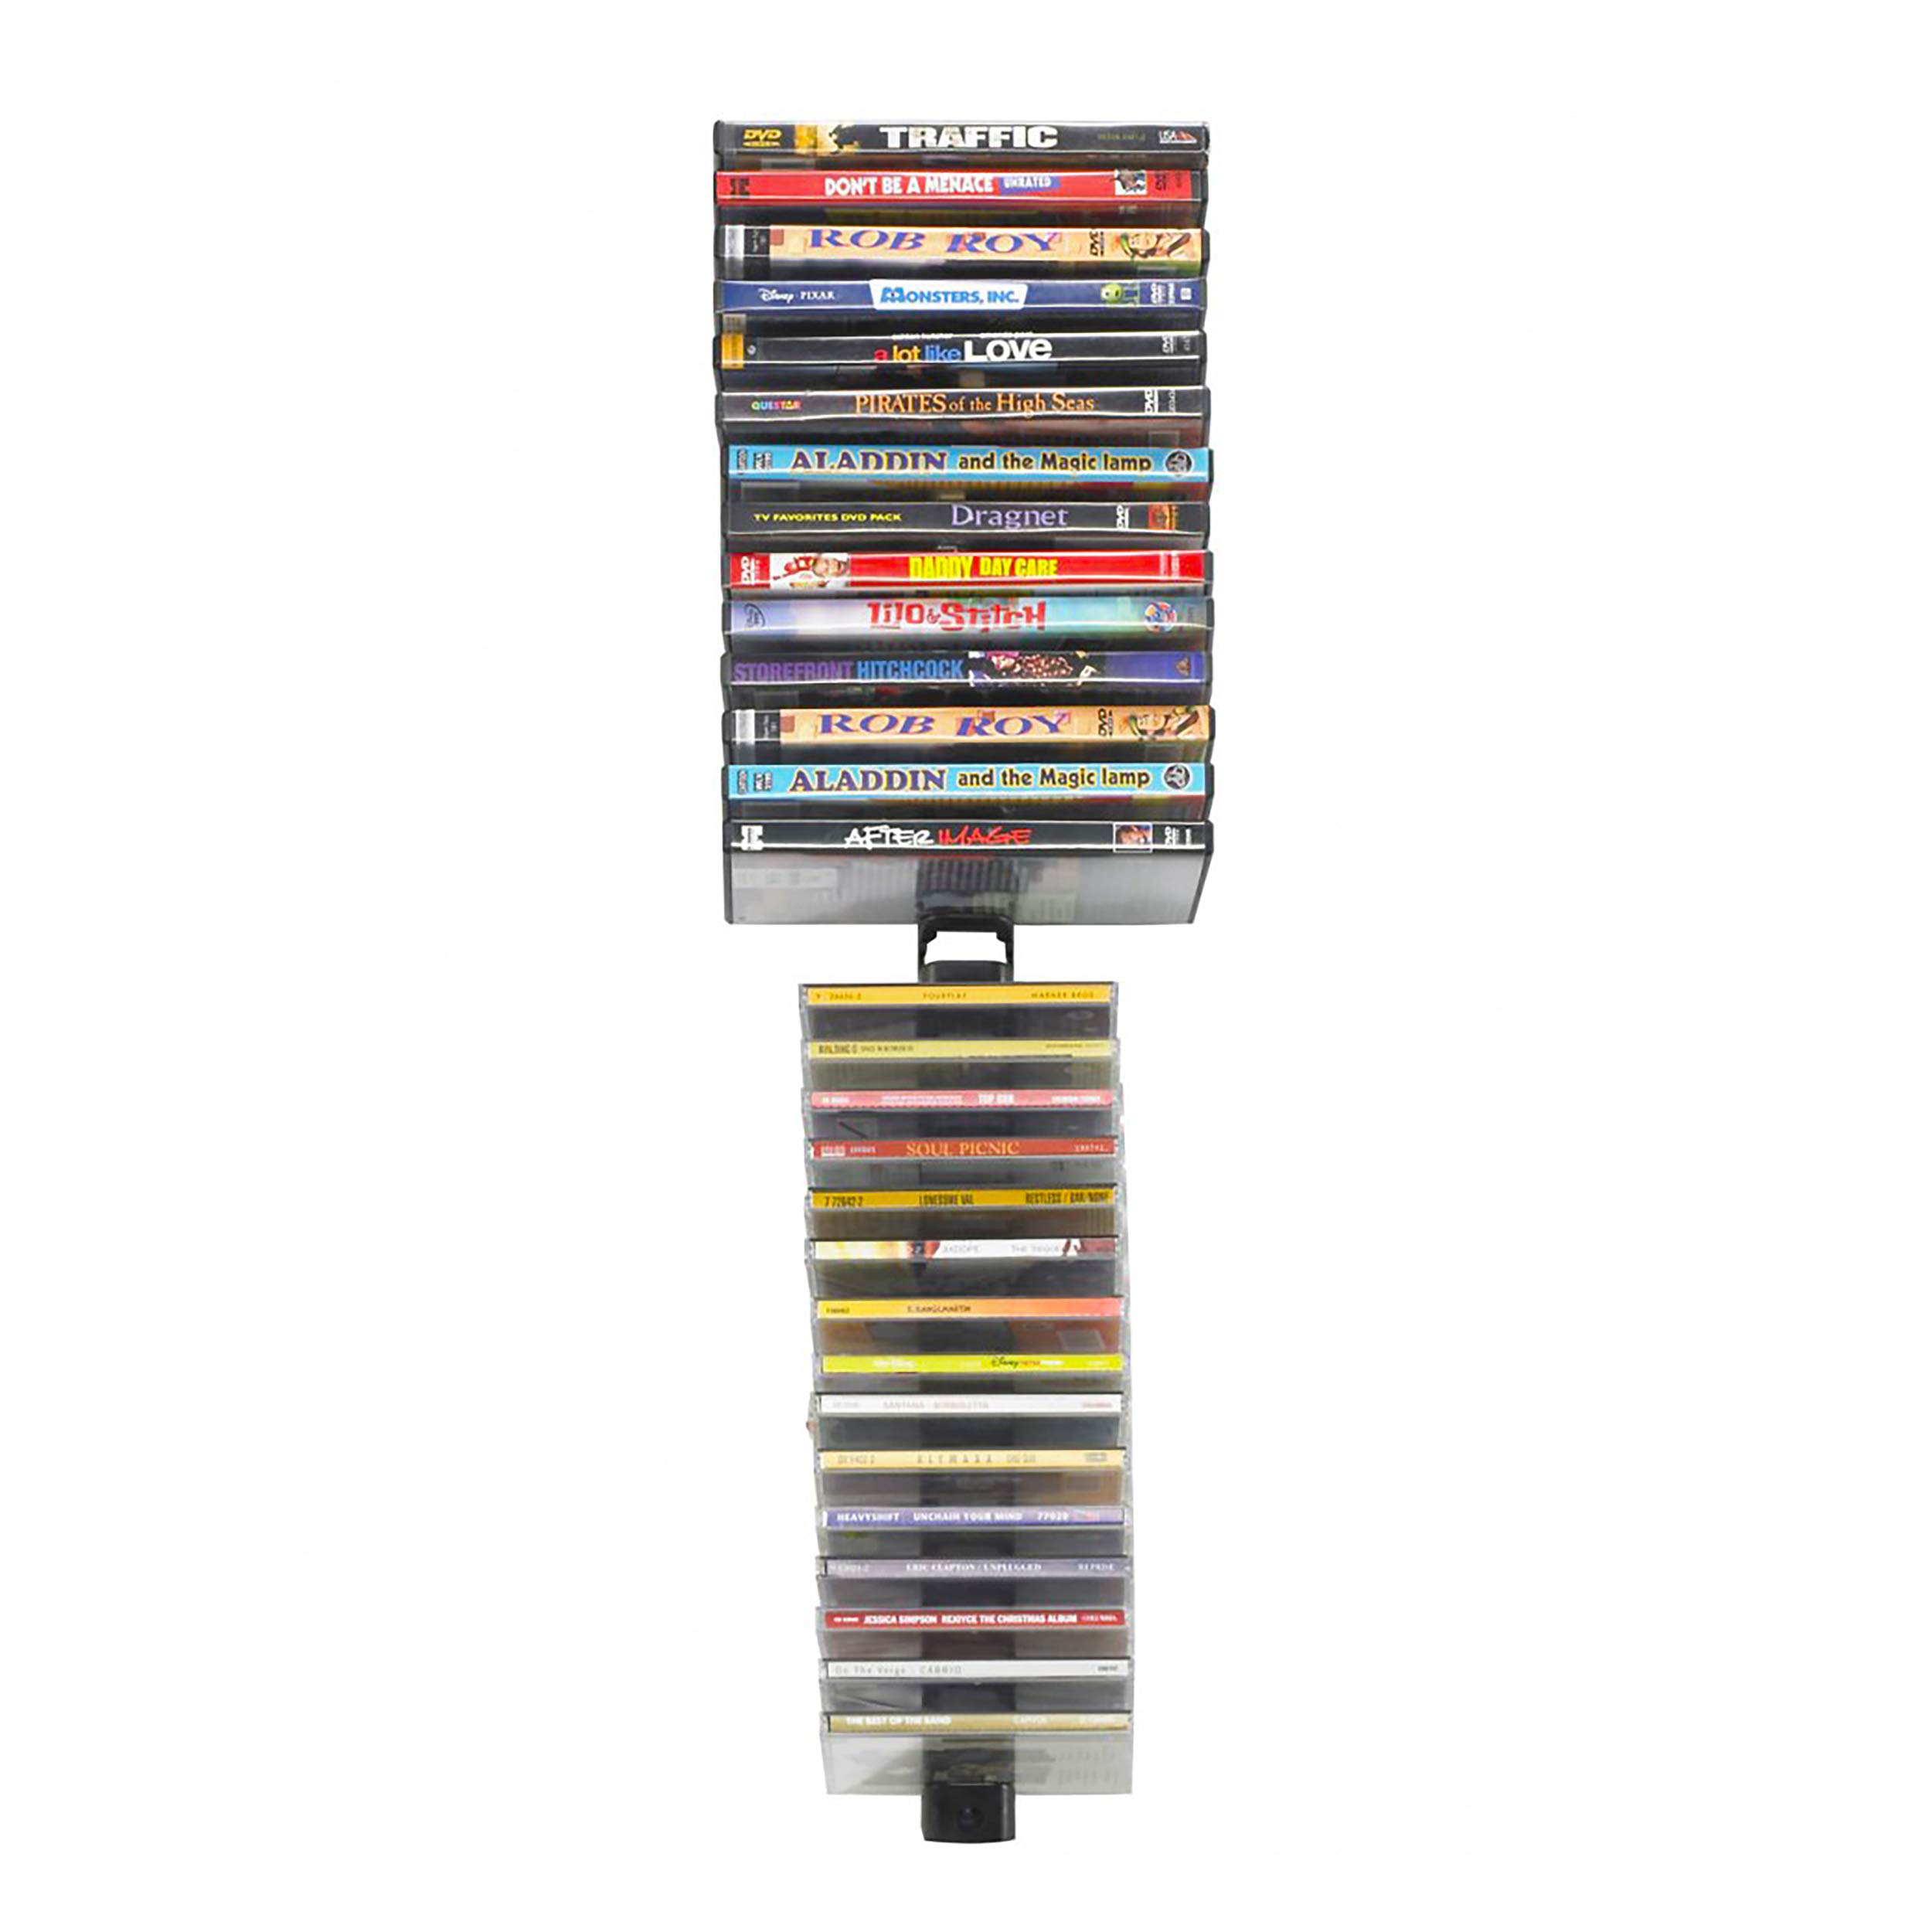 Atlantic Media Stix, Wall-Mount CD/DVD Media Storage Rack, 4-pack, Black (Updated)